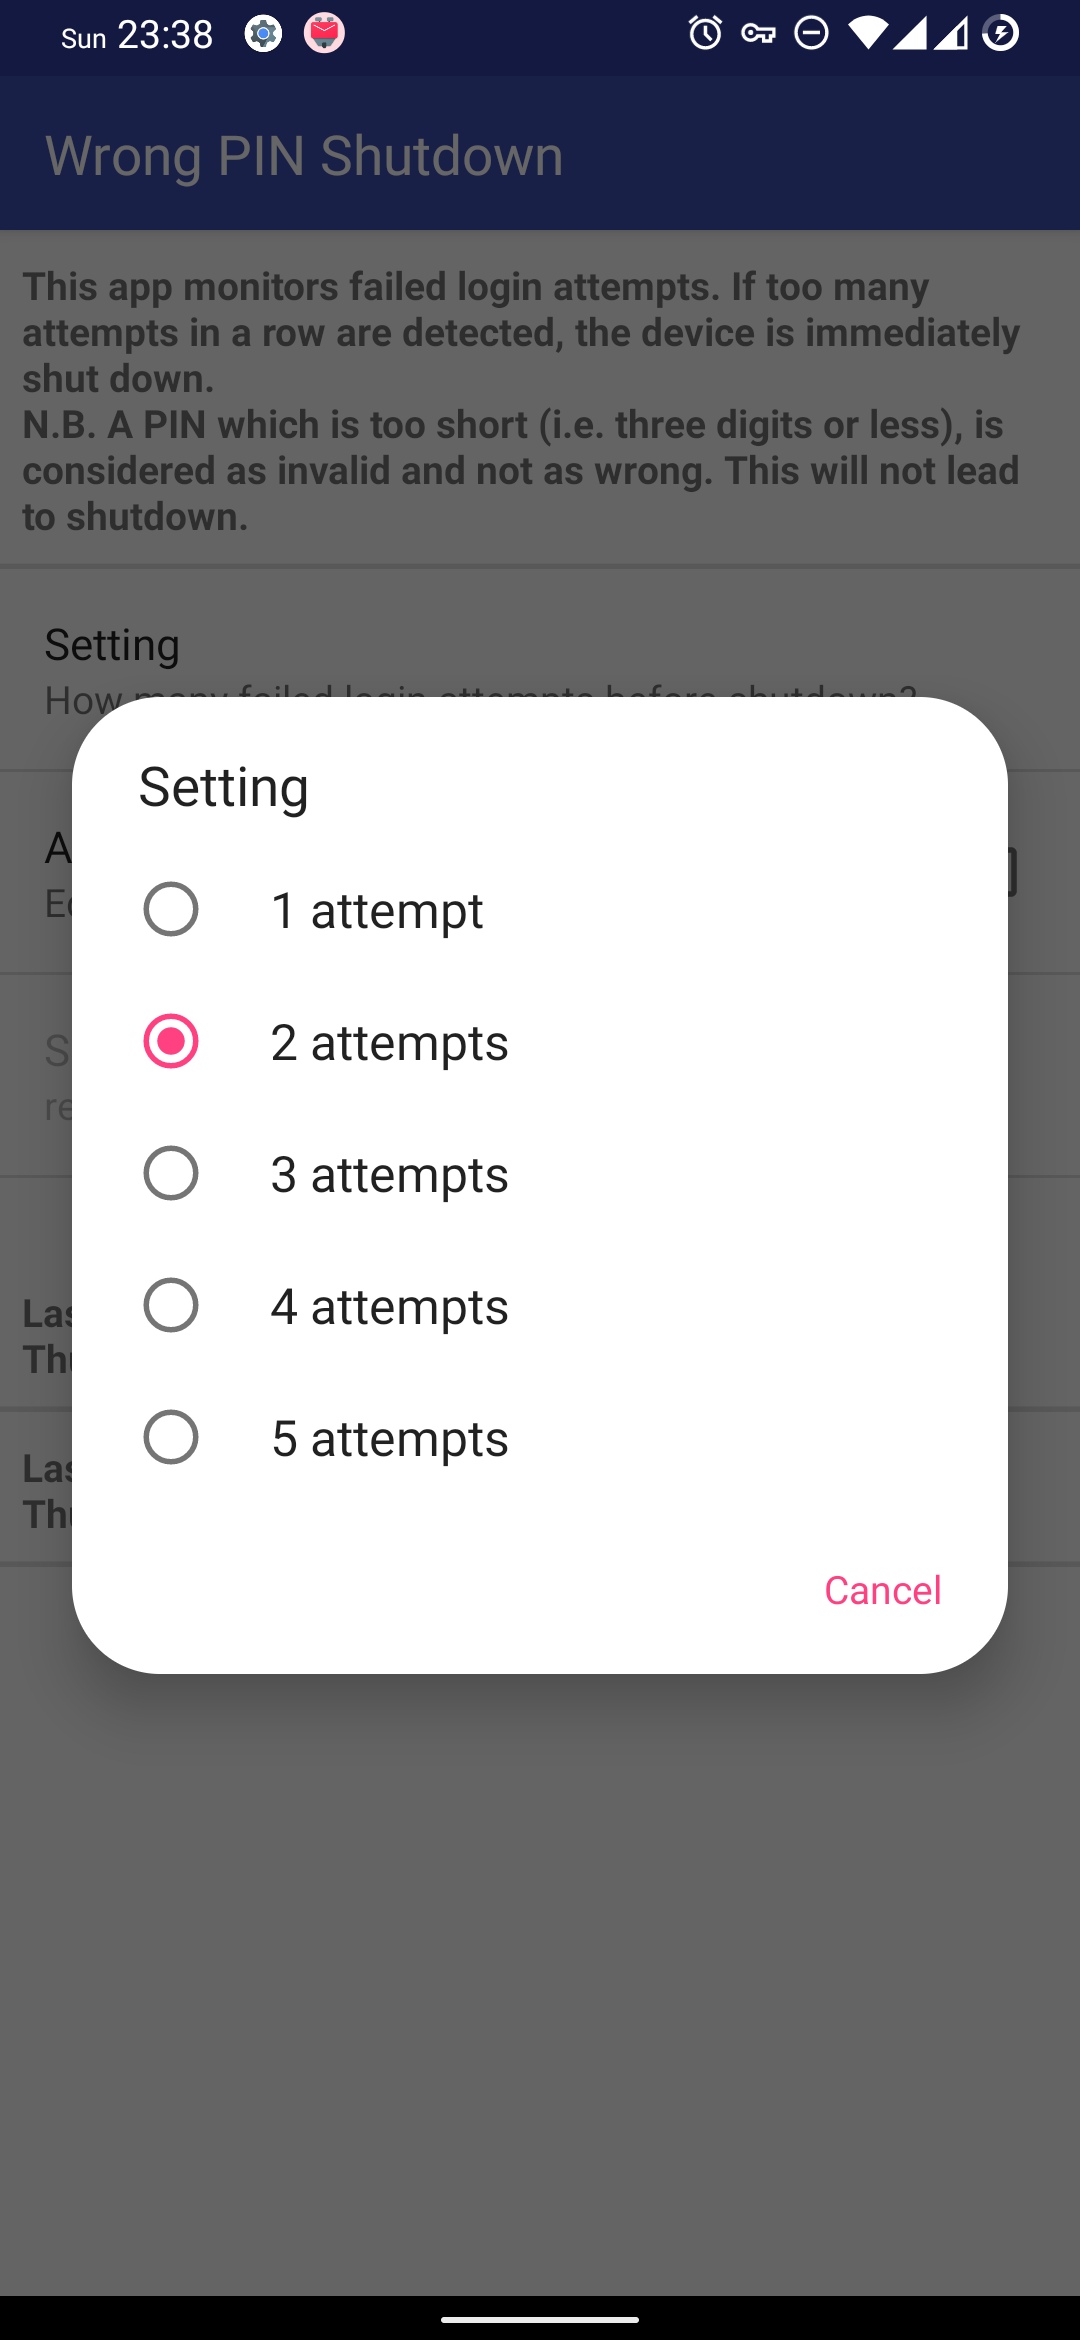 android-lockdown-mode-wrong-pin-shutdown-settings